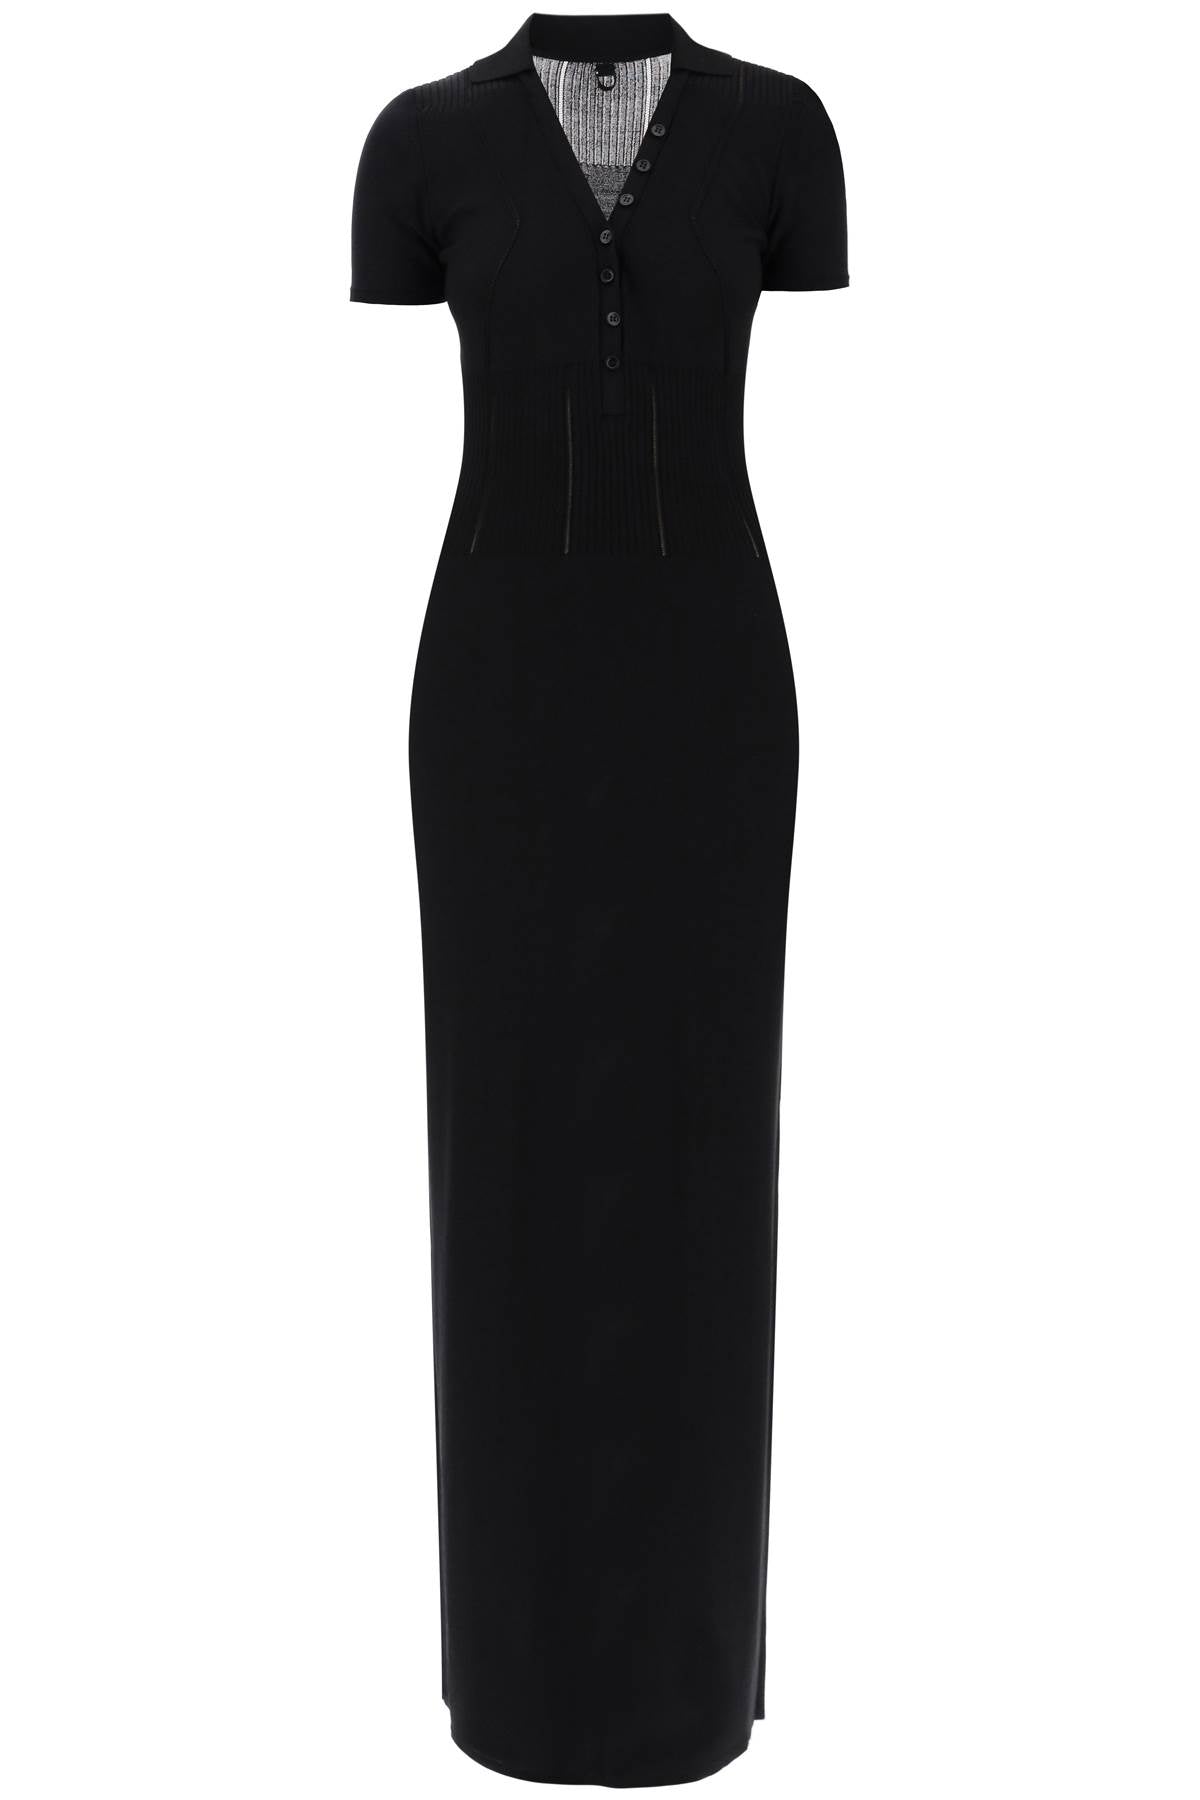 JACQUEMUS Stunning Black Maxi Dress for Women - Elegant and Timeless Design